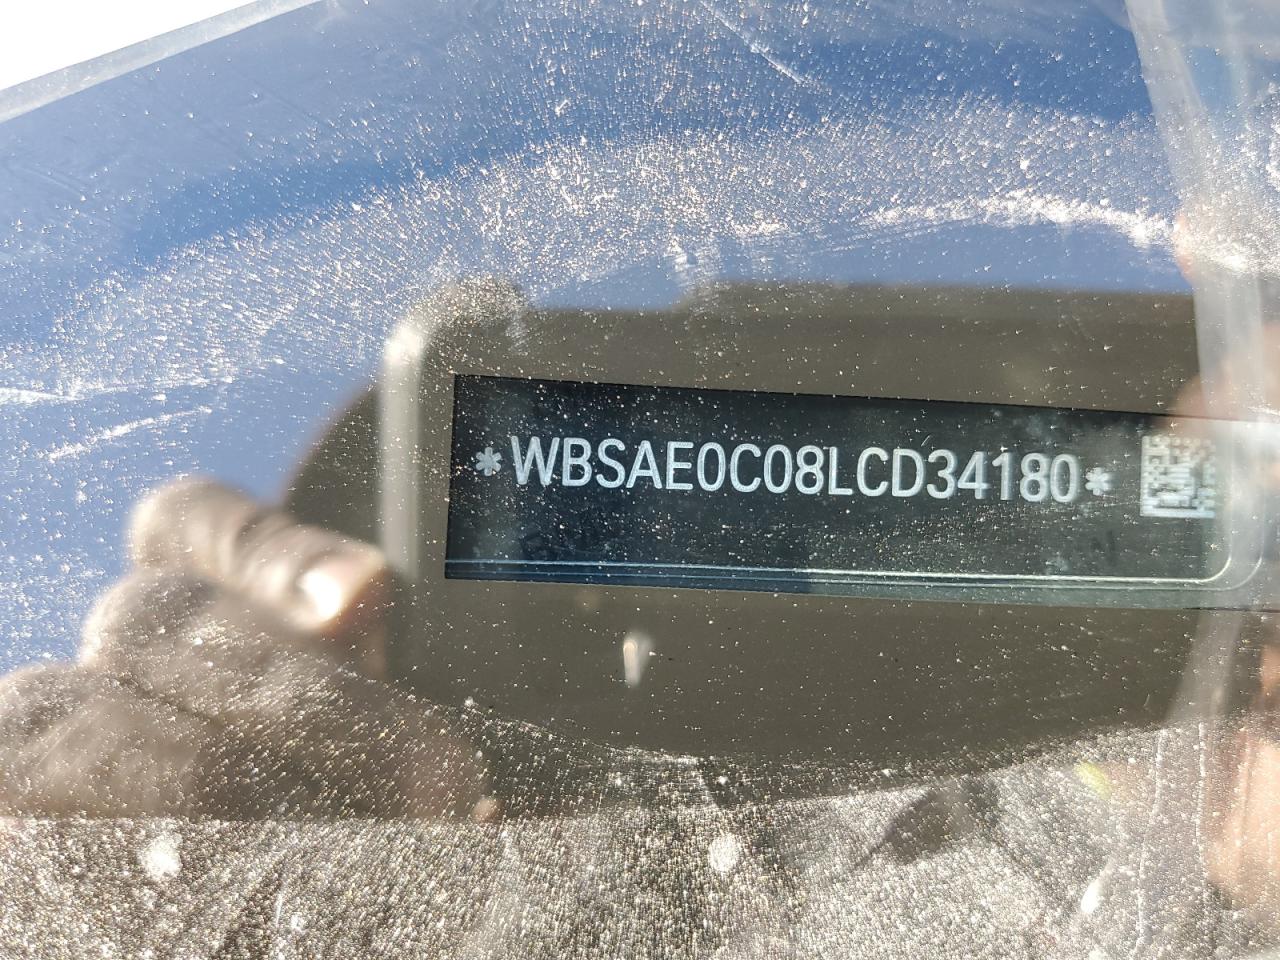 WBSAE0C08LCD34180 2020 BMW M8